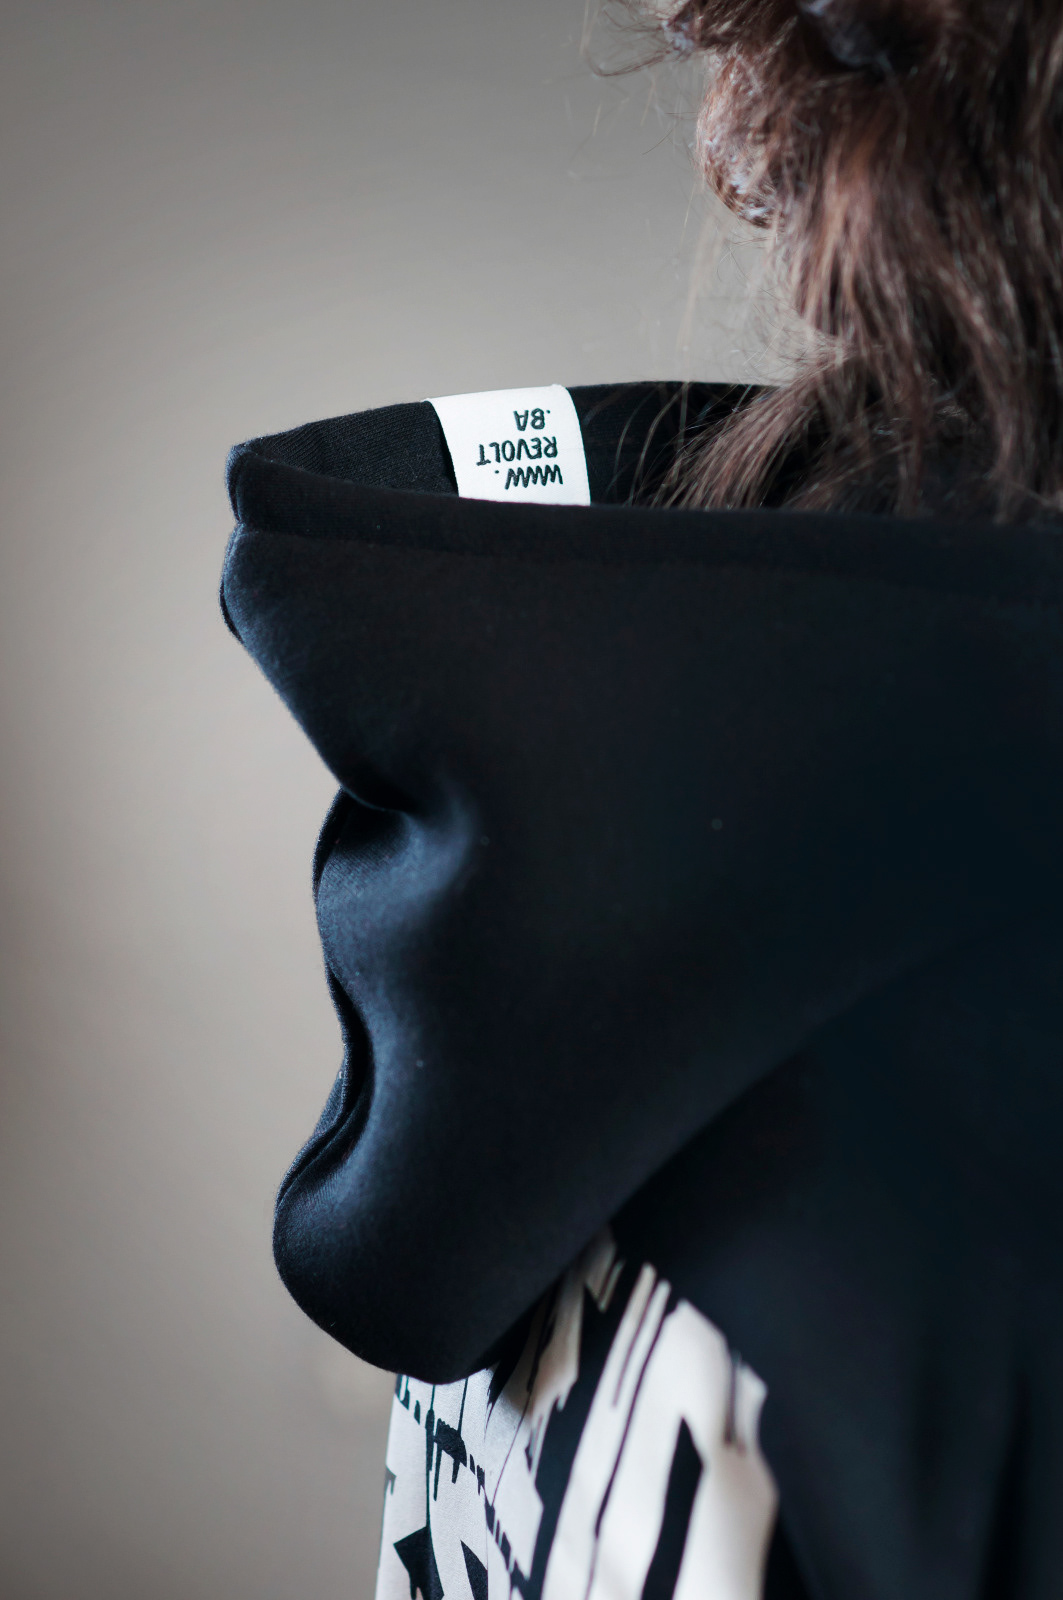 art apparel streeet streetwear hoodies cotton print design brand Sarajevo winter Clothing